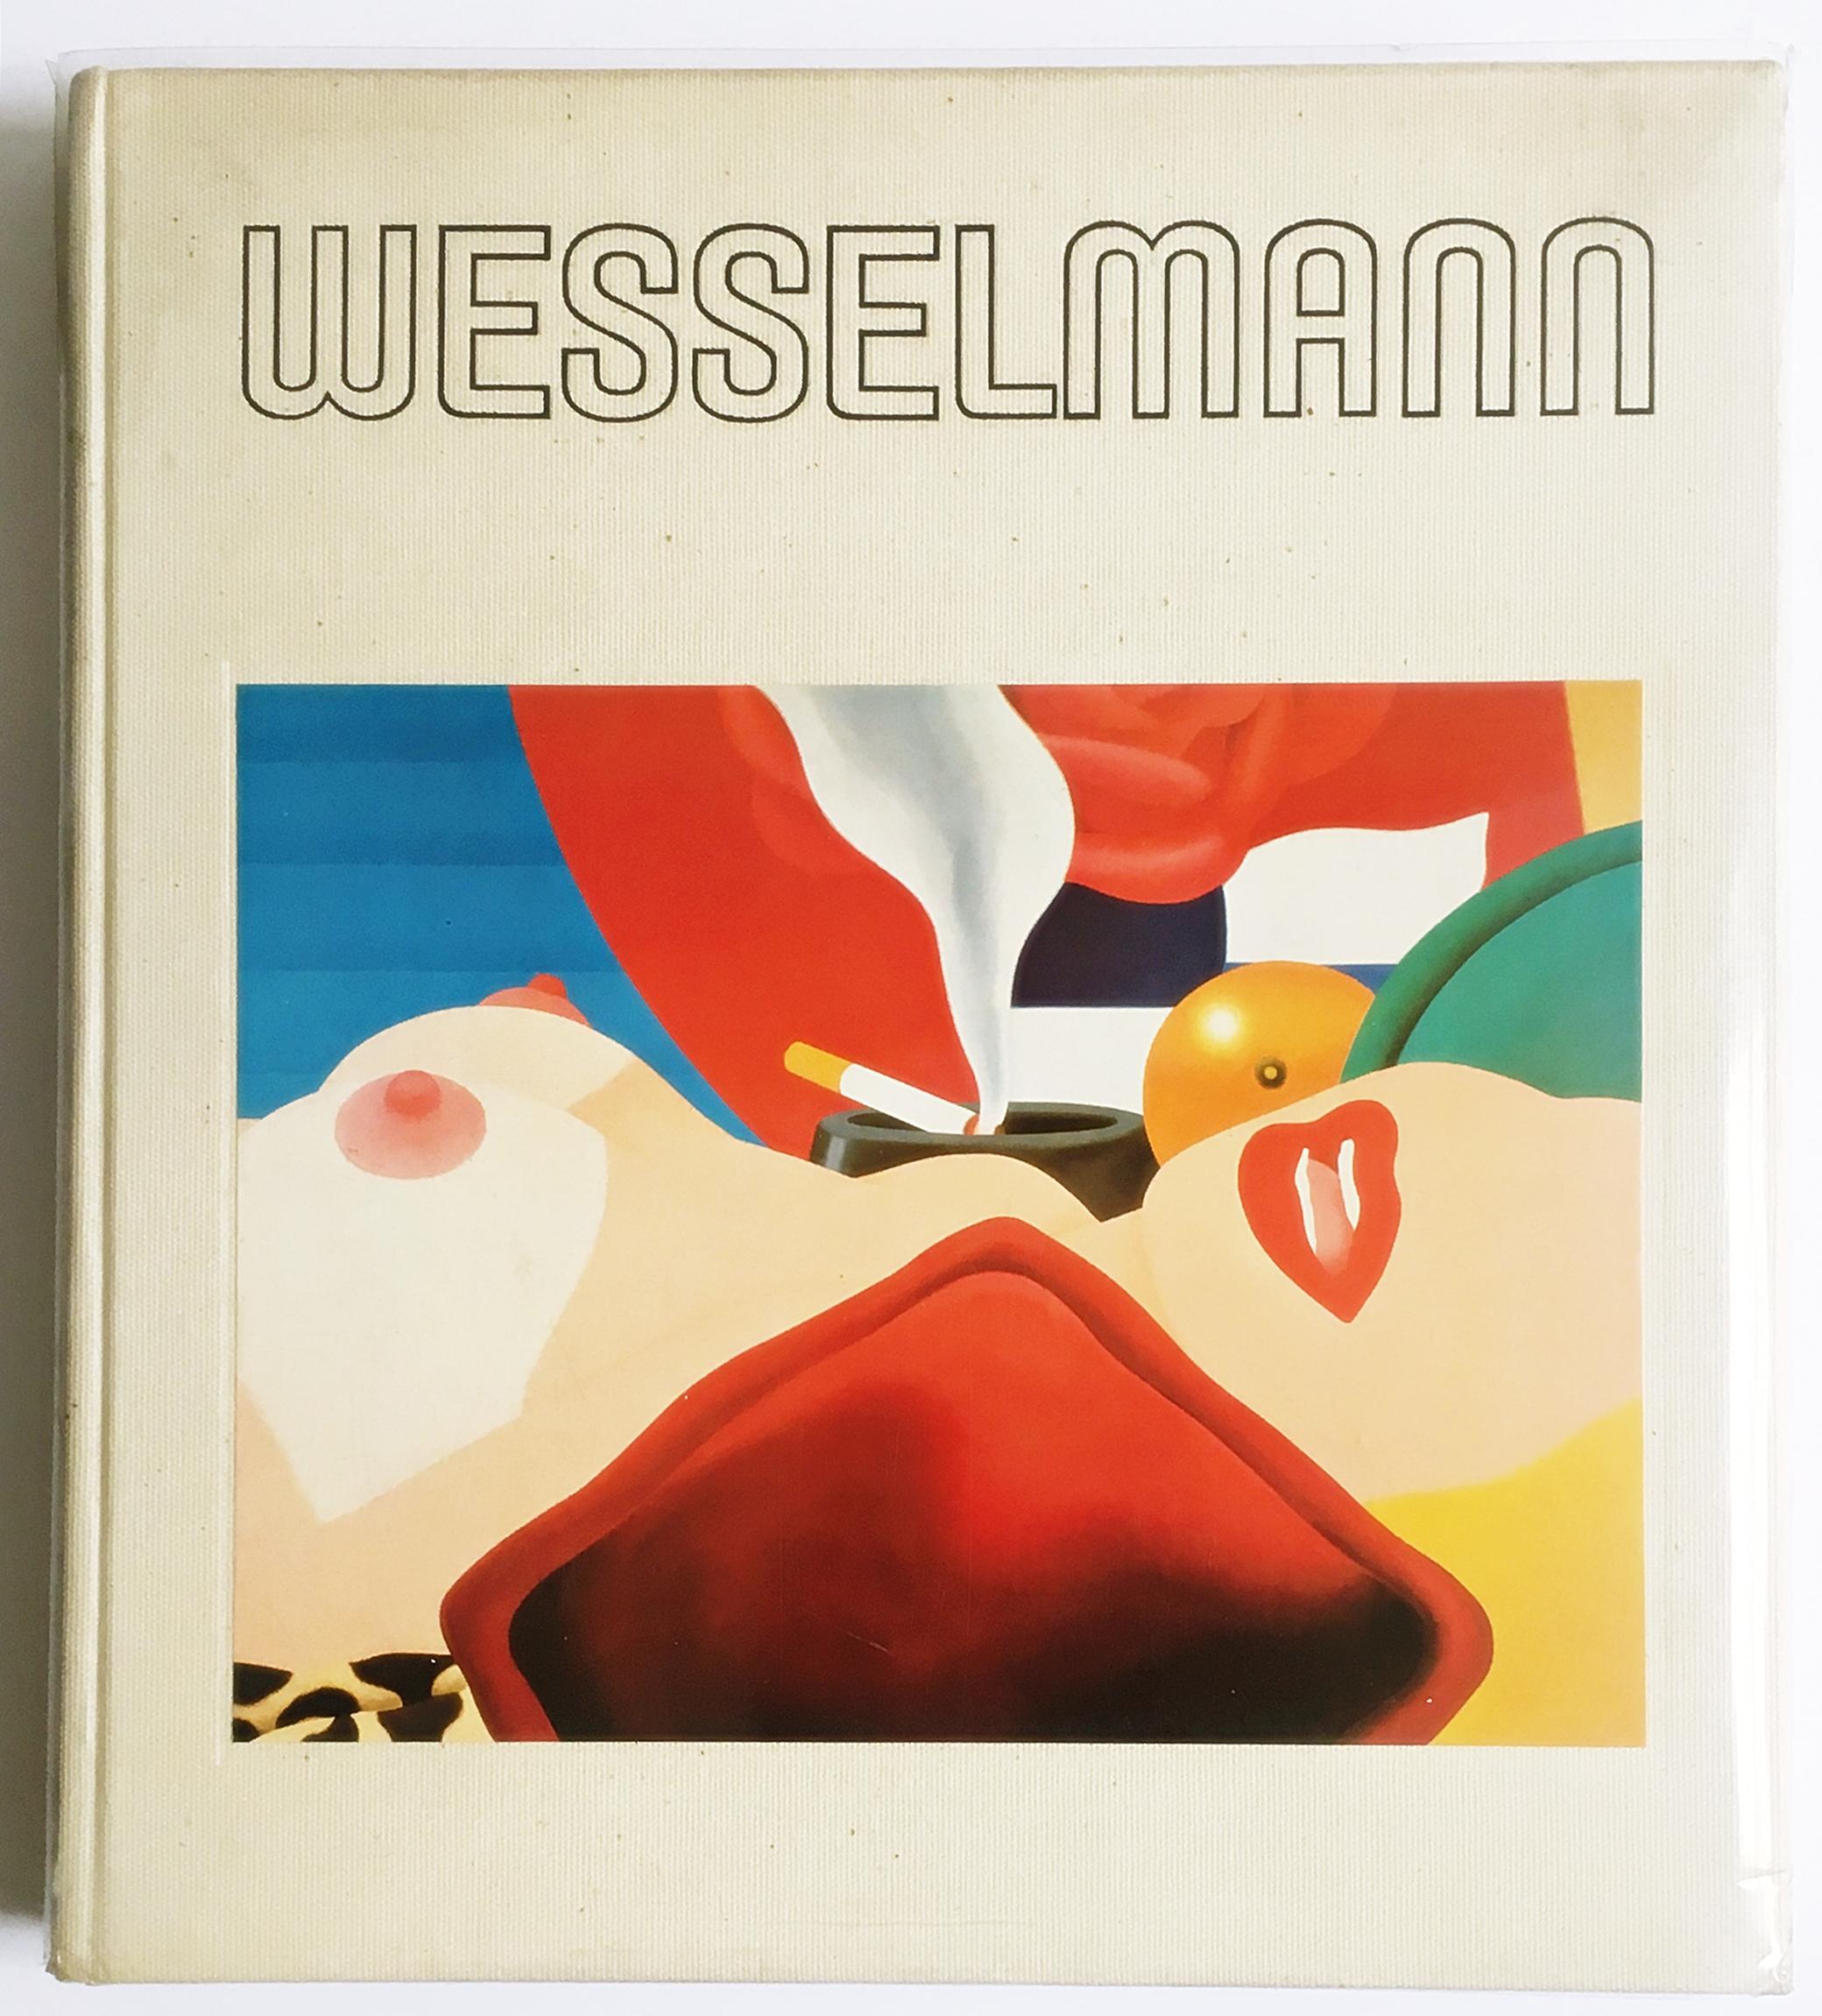 tom wesselmann signature